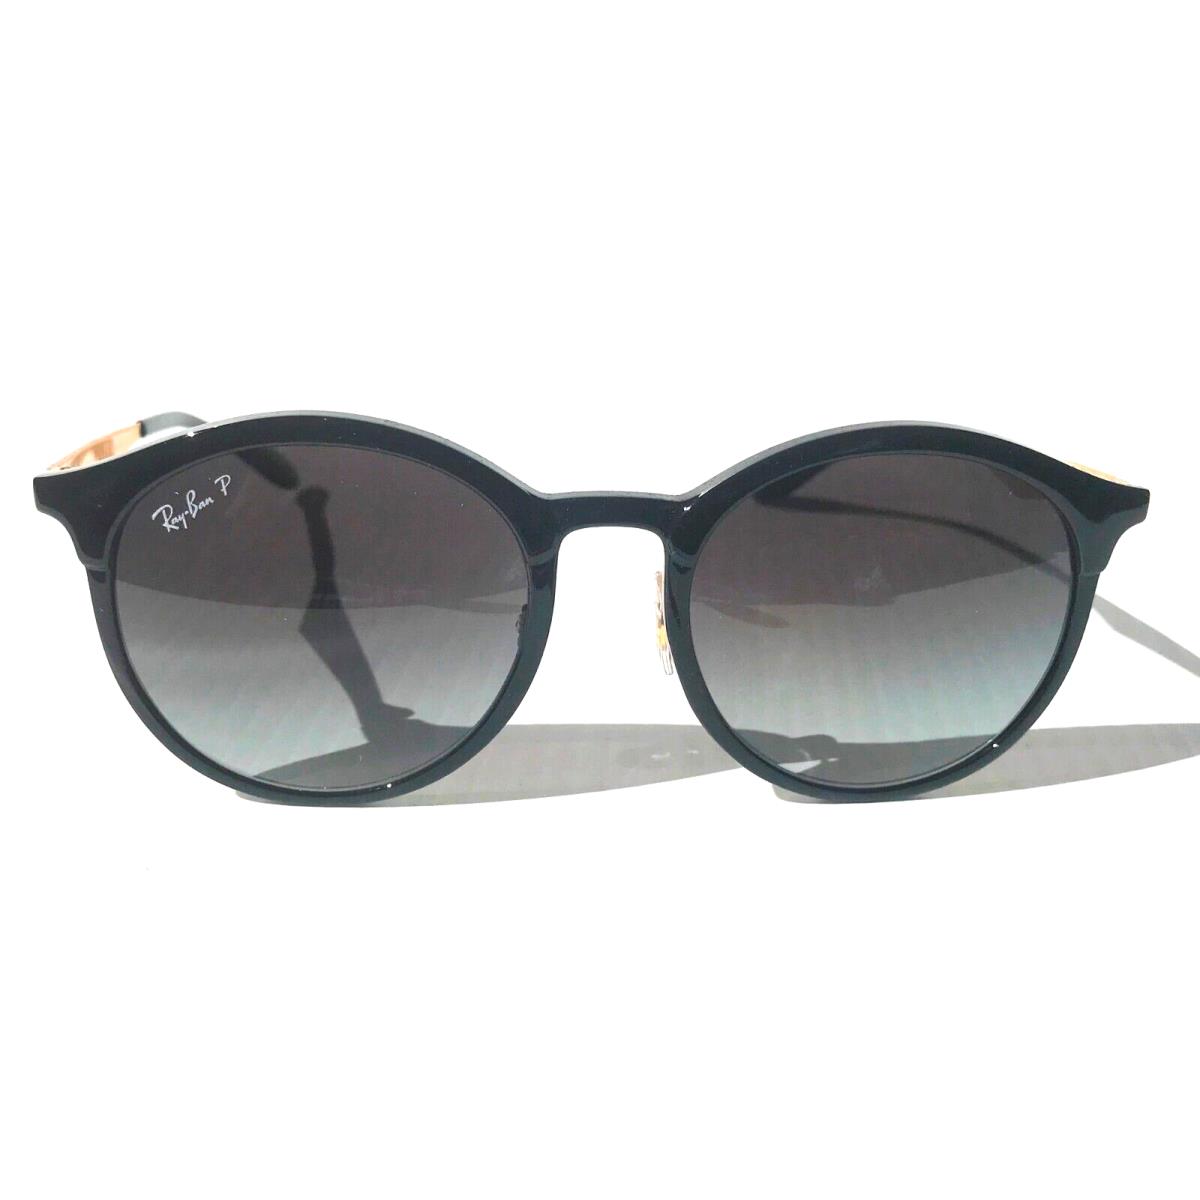 Ray-Ban sunglasses Emma - Frame: Black and Gold, Lens: Grey 6